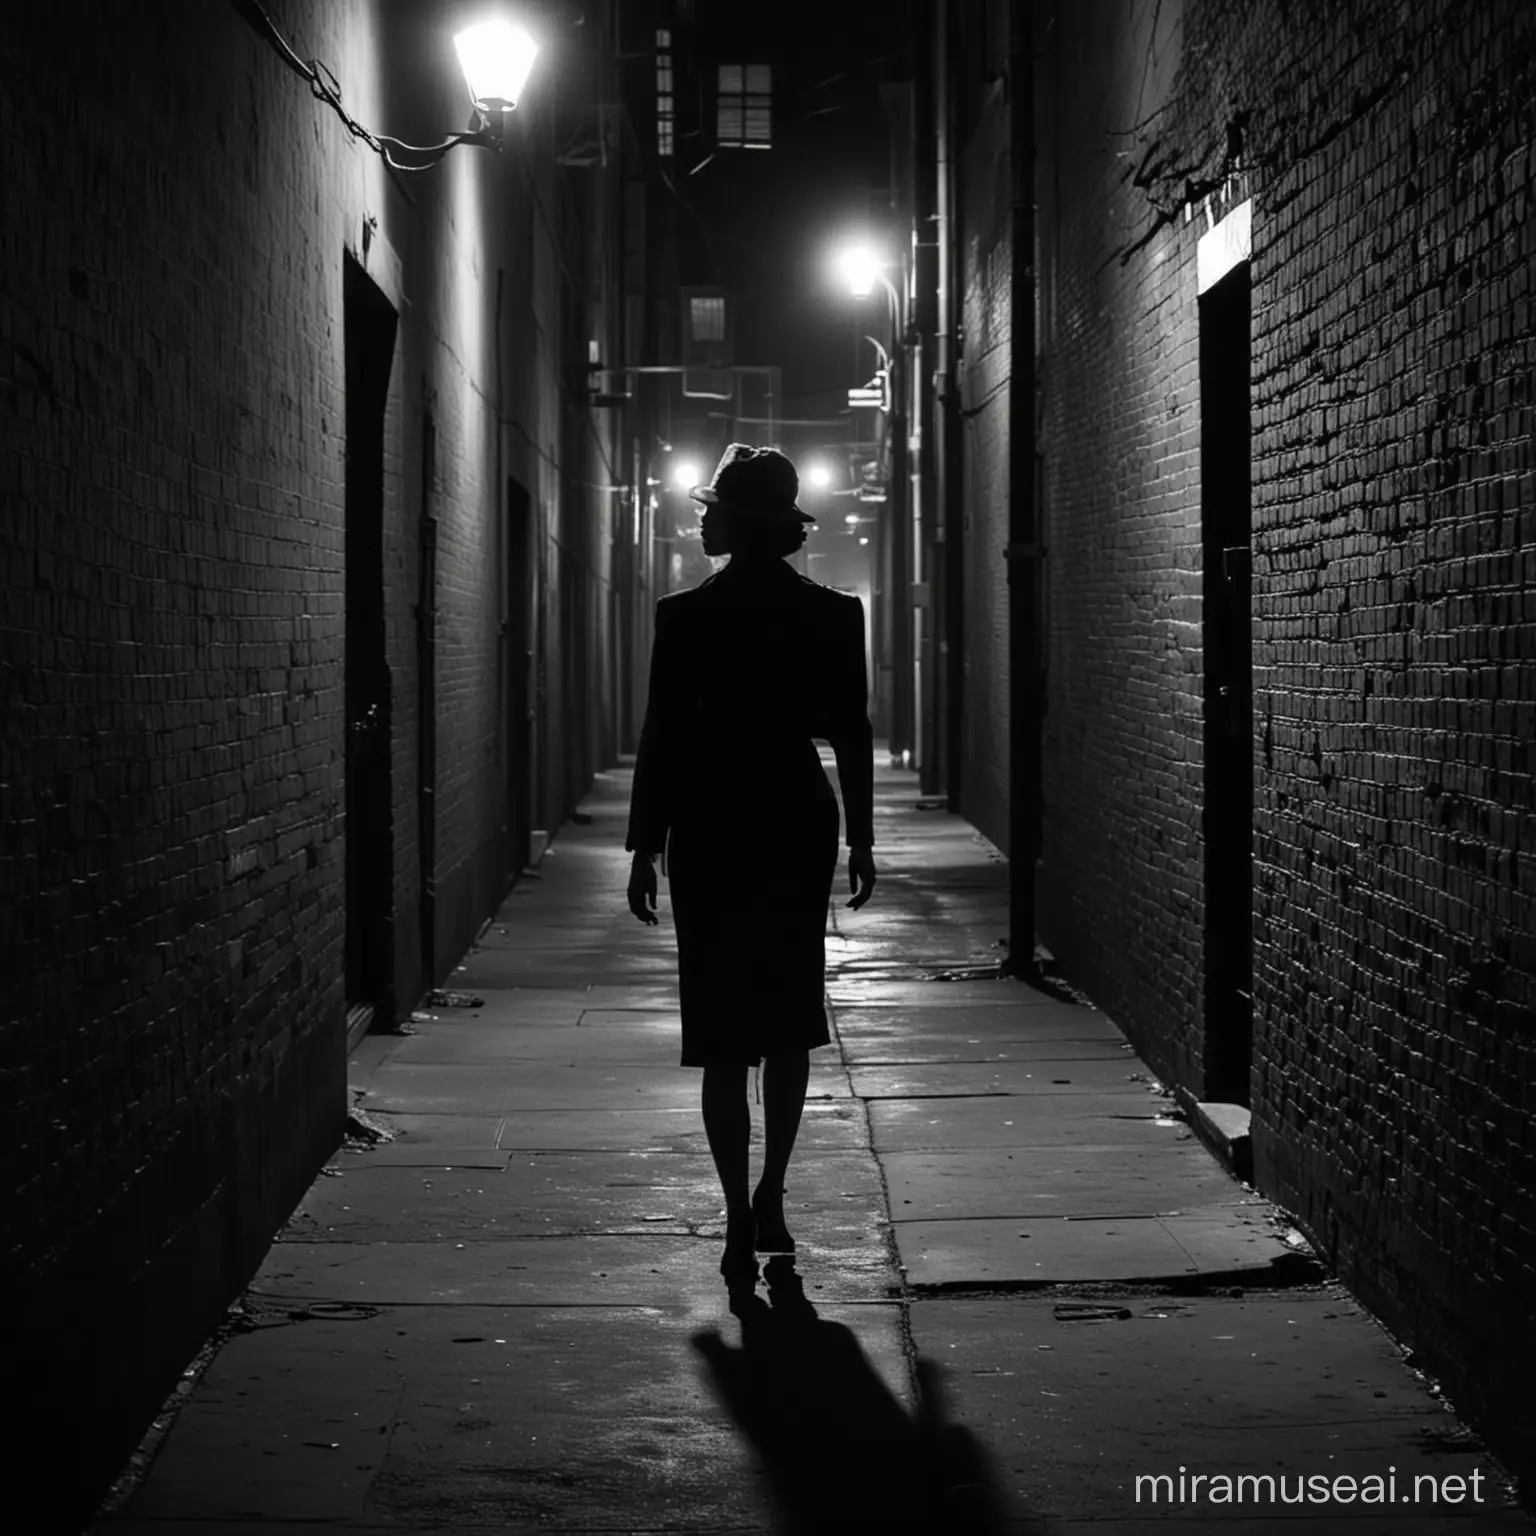 Mysterious Woman Walking Alone in Retro Film Noir Style Alley